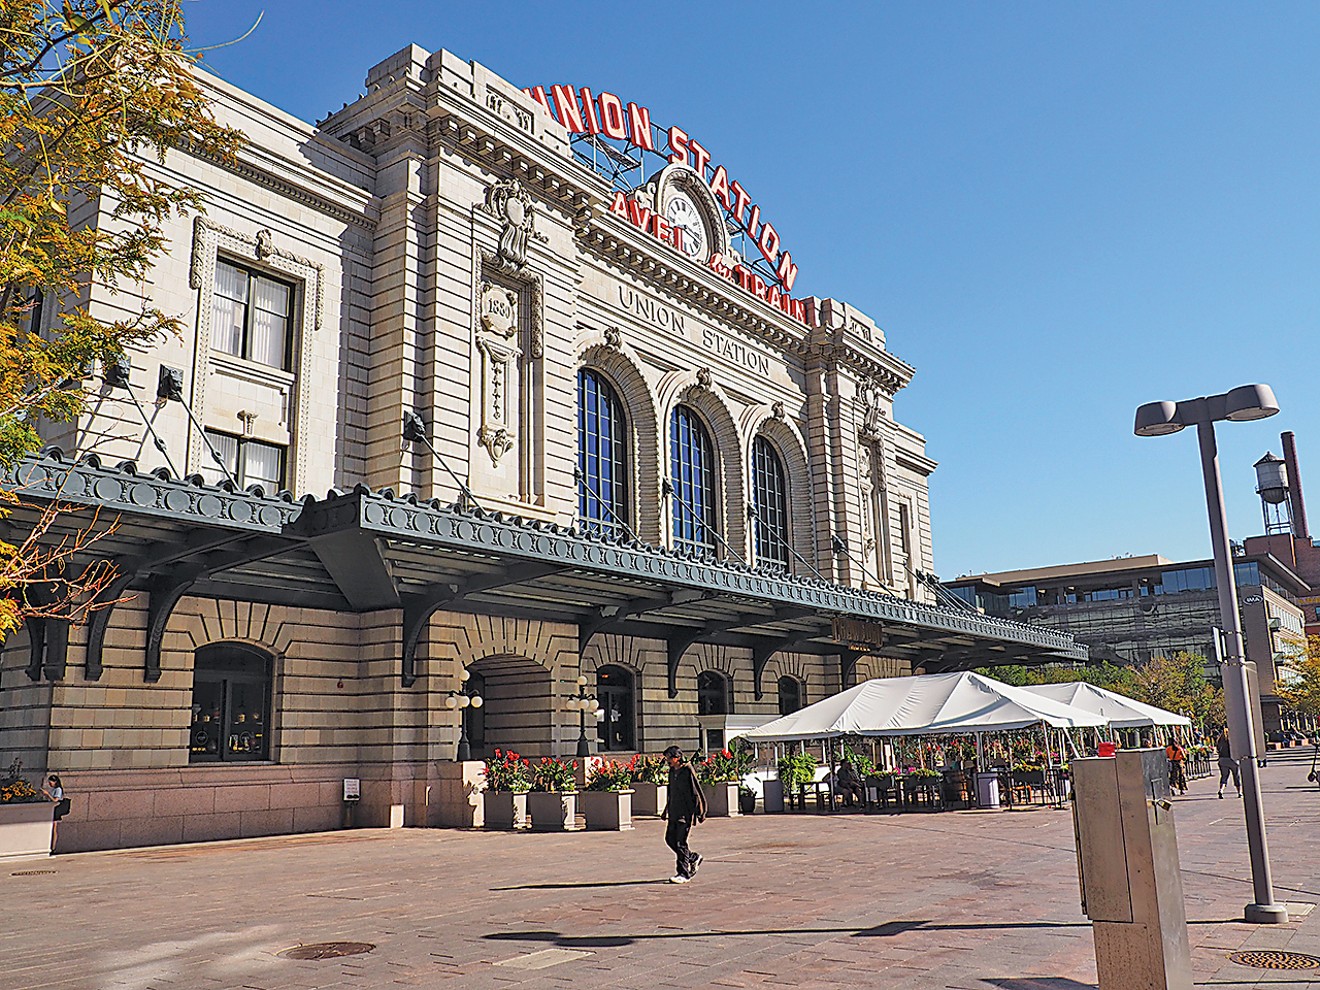 Union Station is a transit hub in Denver.